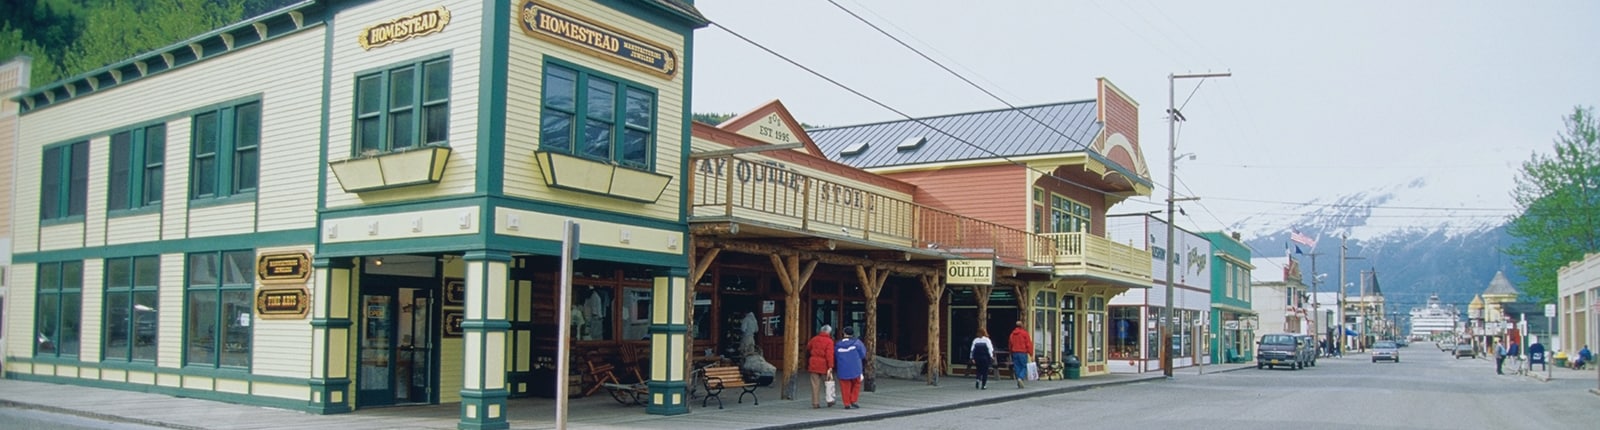 Old West history in Skagway Alaska